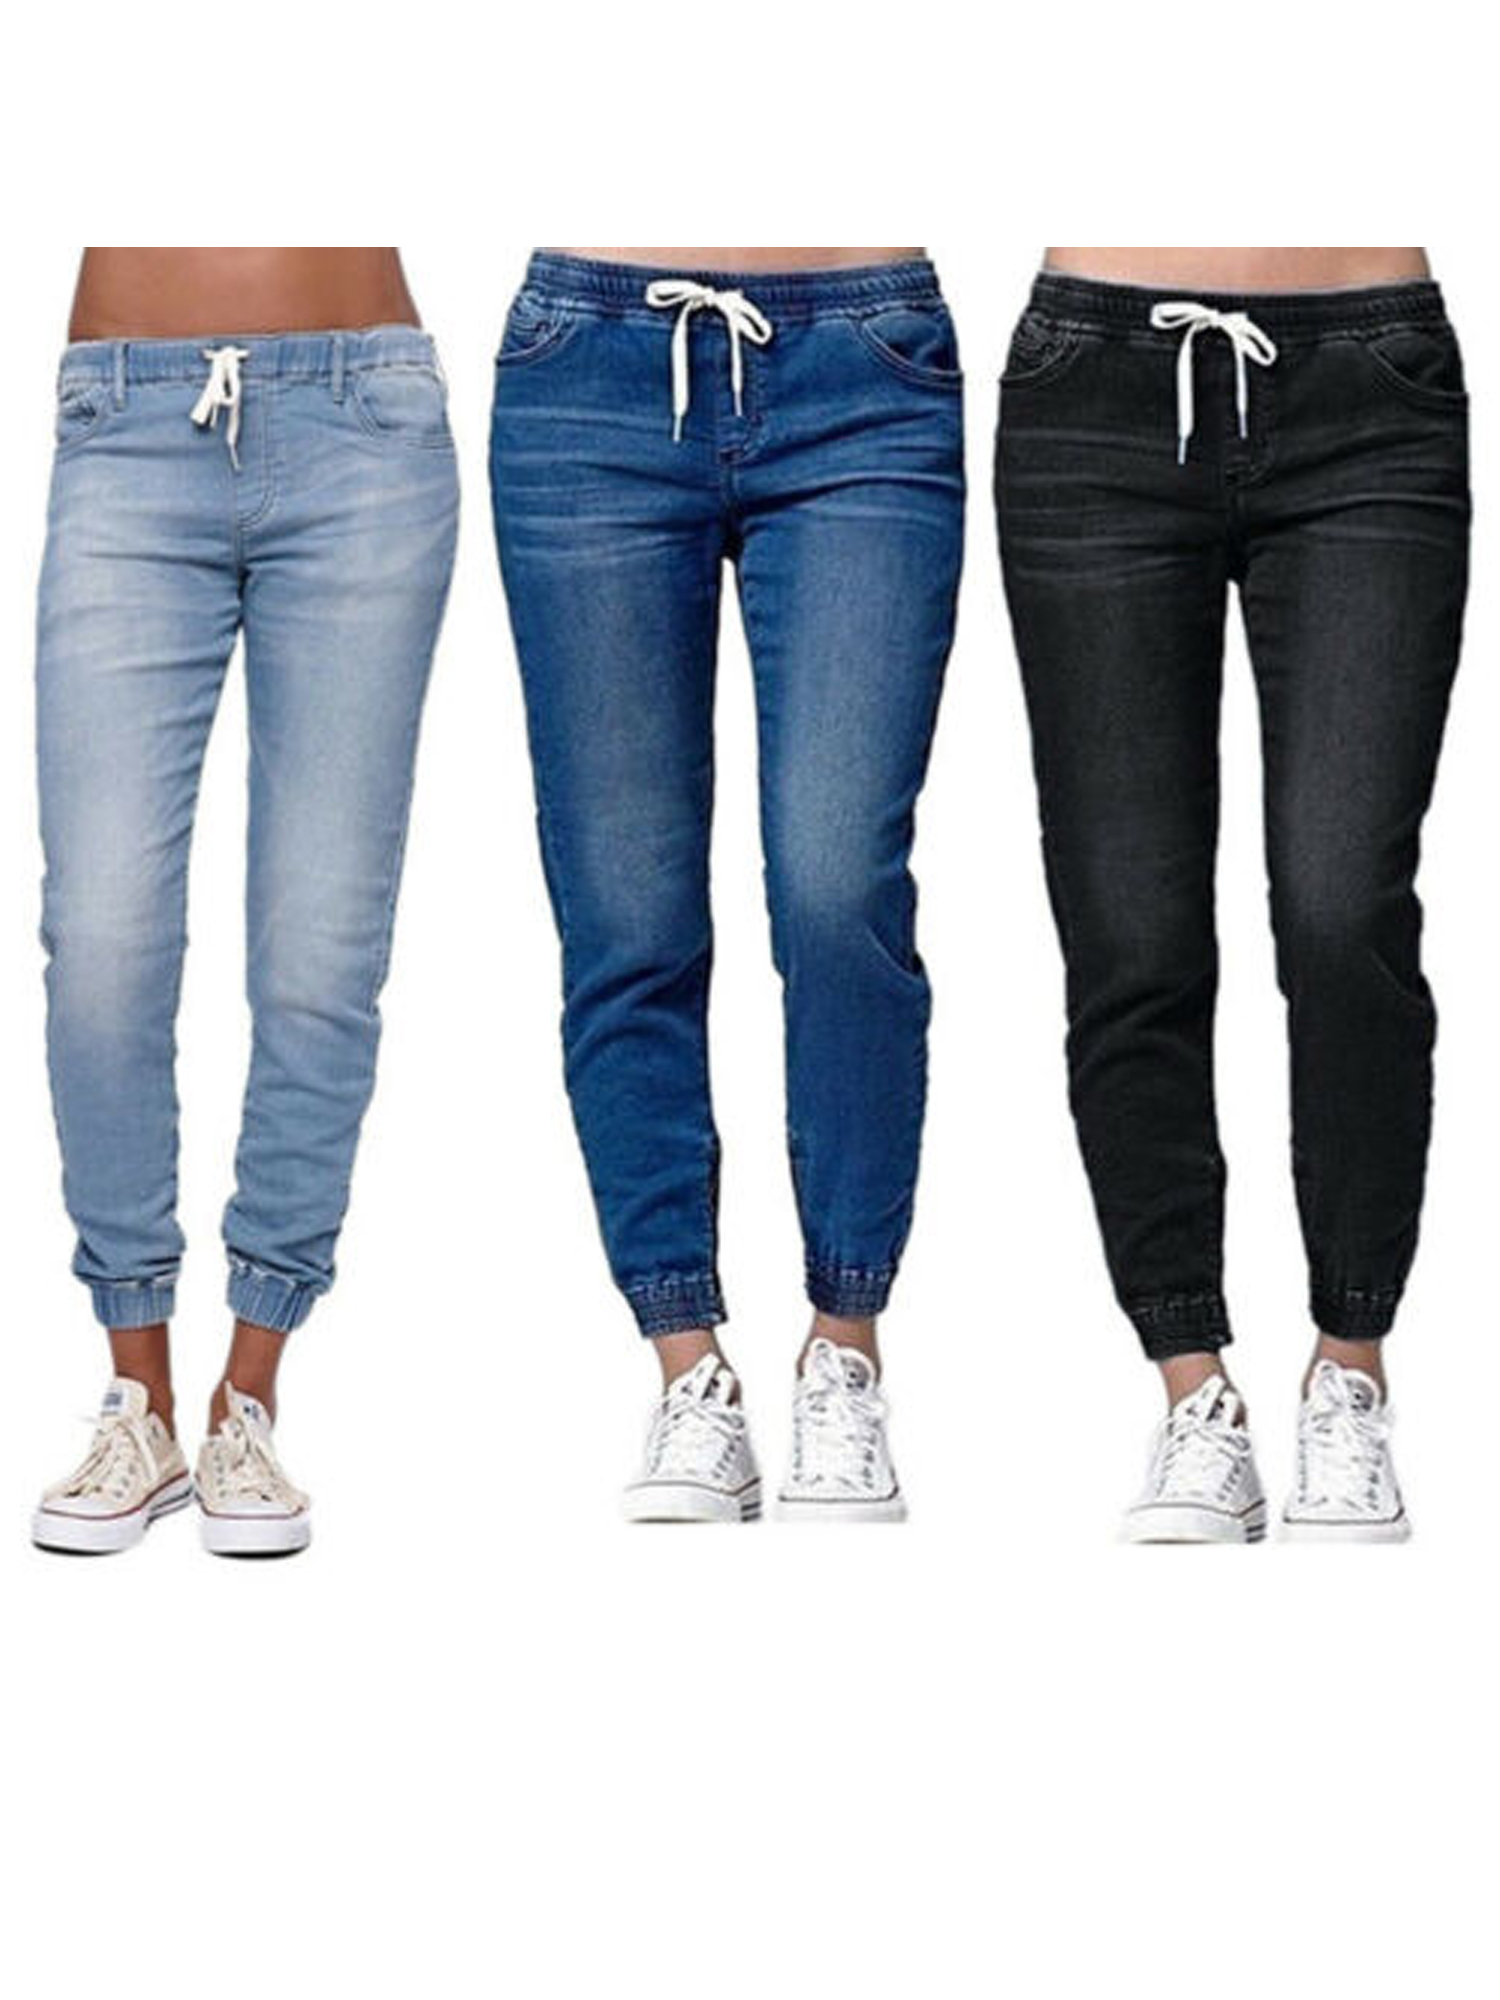 GuliriFei Women's Mid Rise Skinny Jeans Drawstring Elatic Waist Denim Pants - image 5 of 6